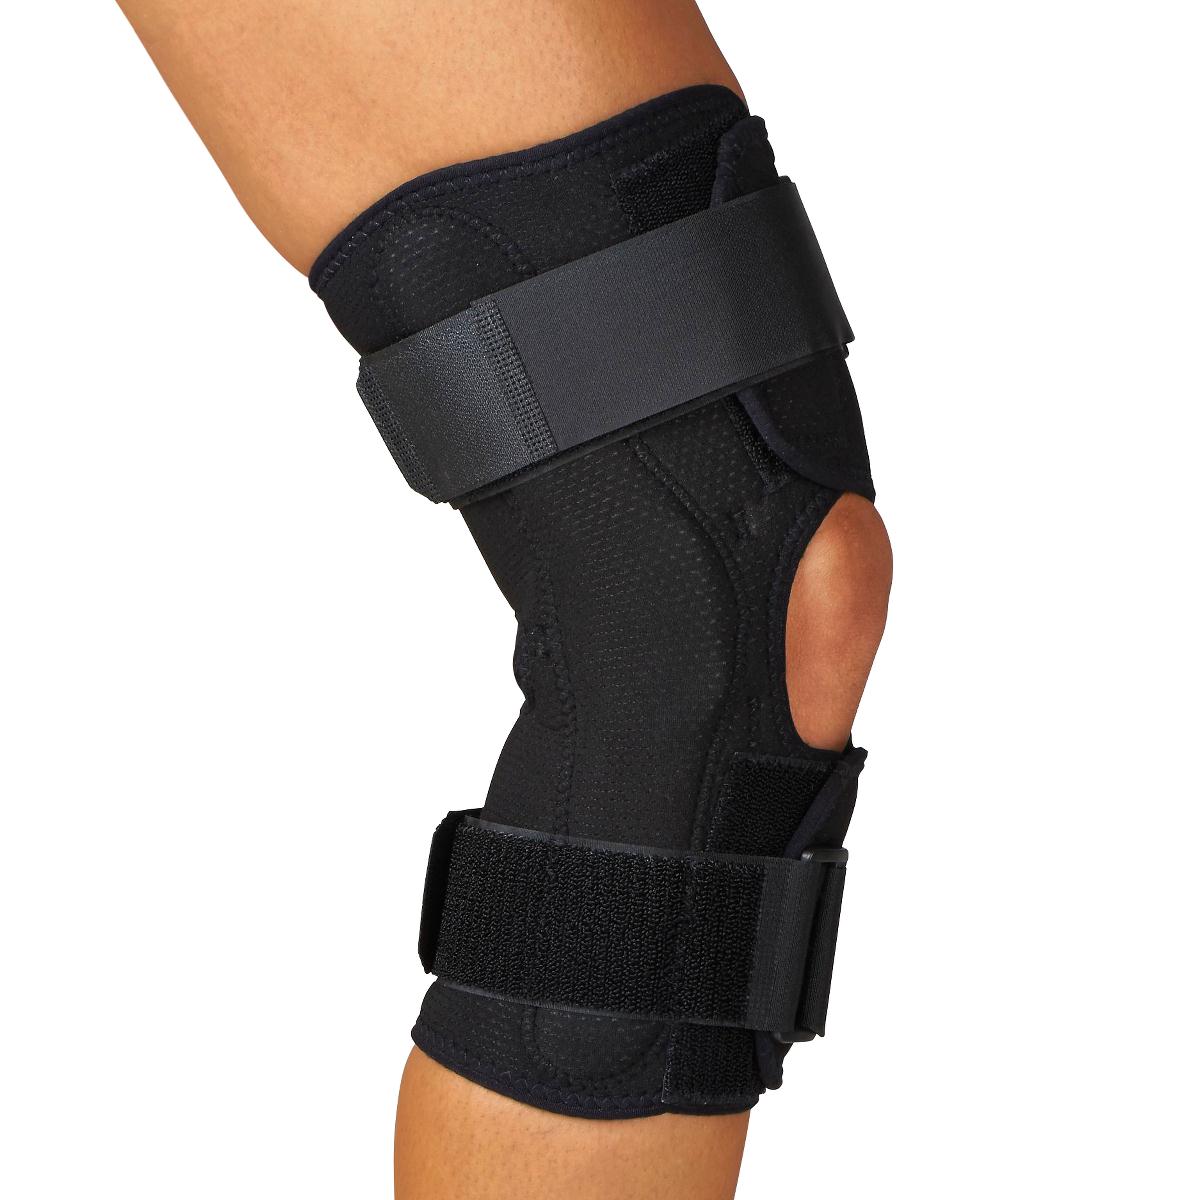 CMO Wrap Around Hinged Knee Support